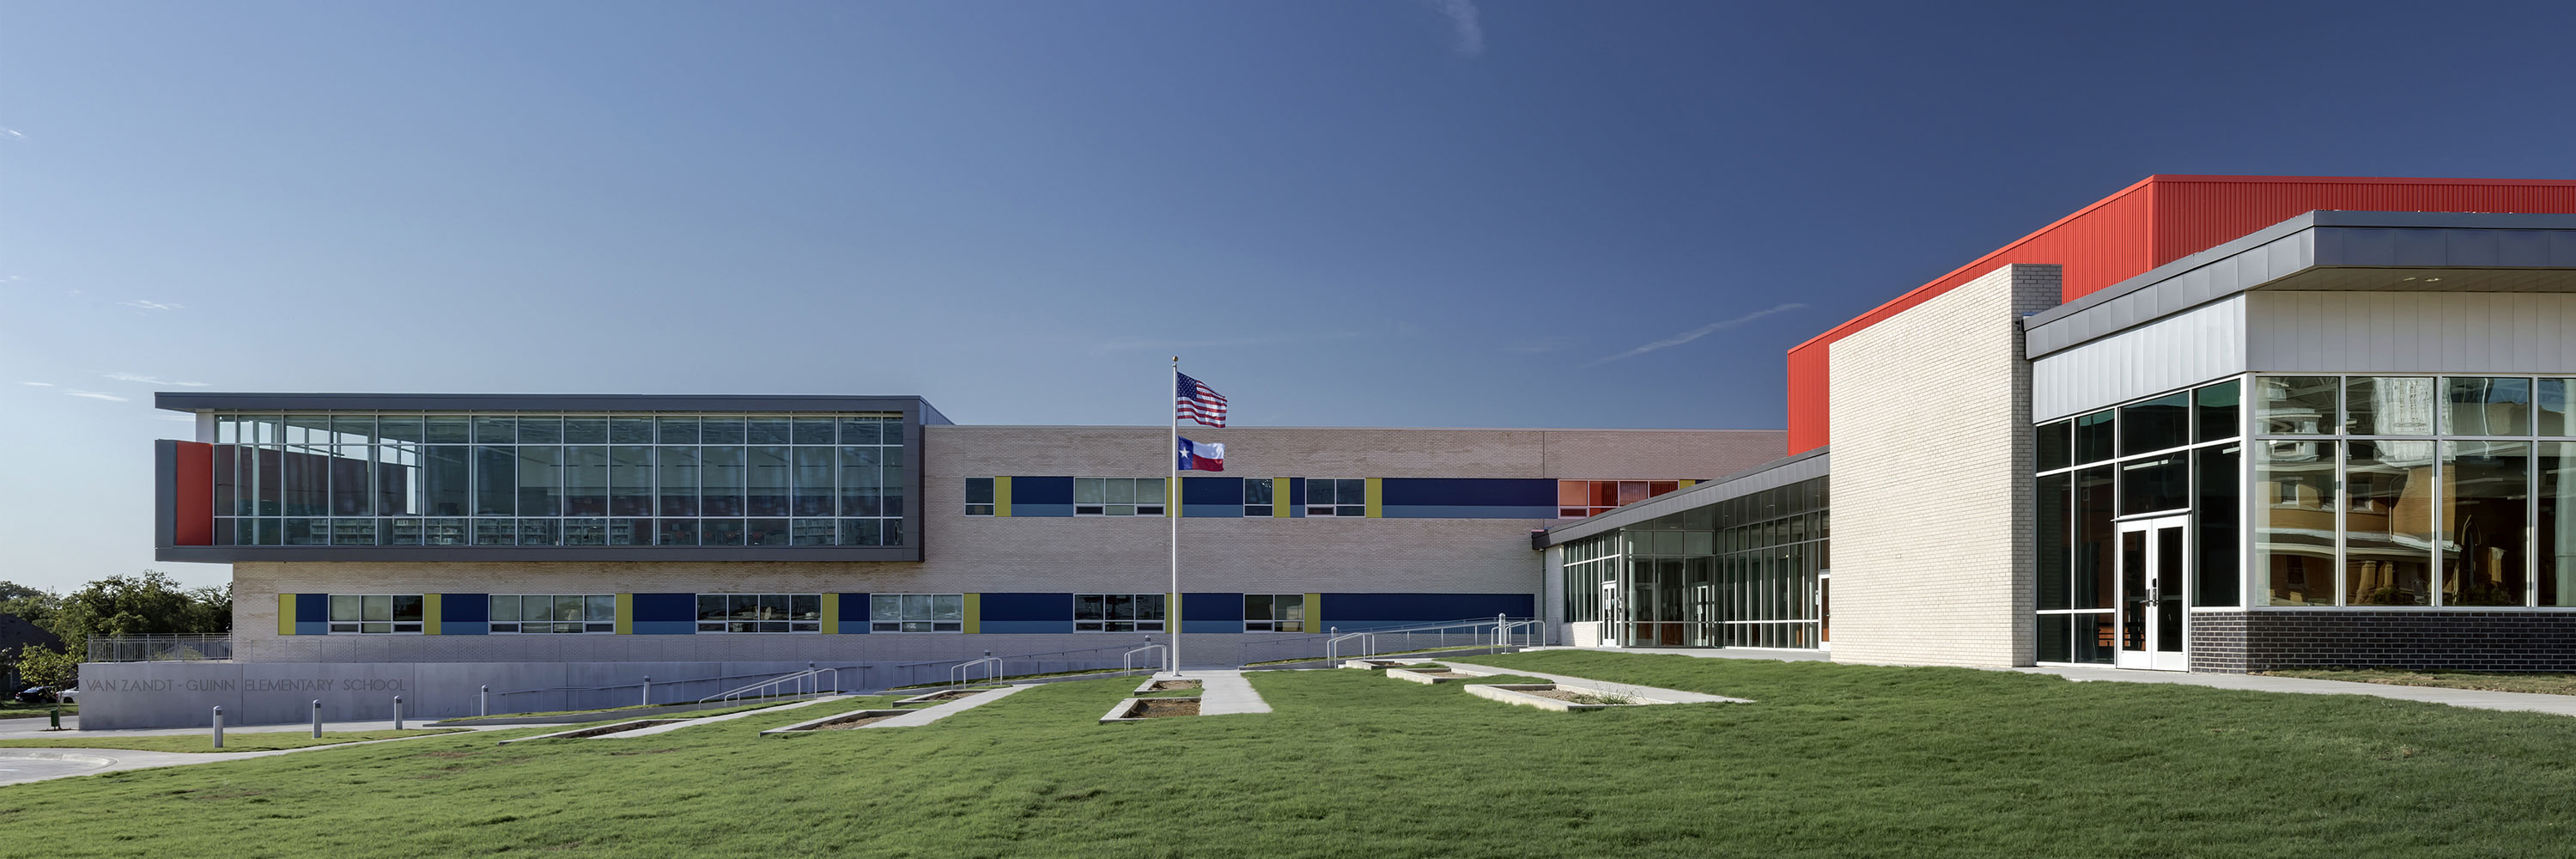 Fort Worth ISD Van Zandt-Guinn Elementary School